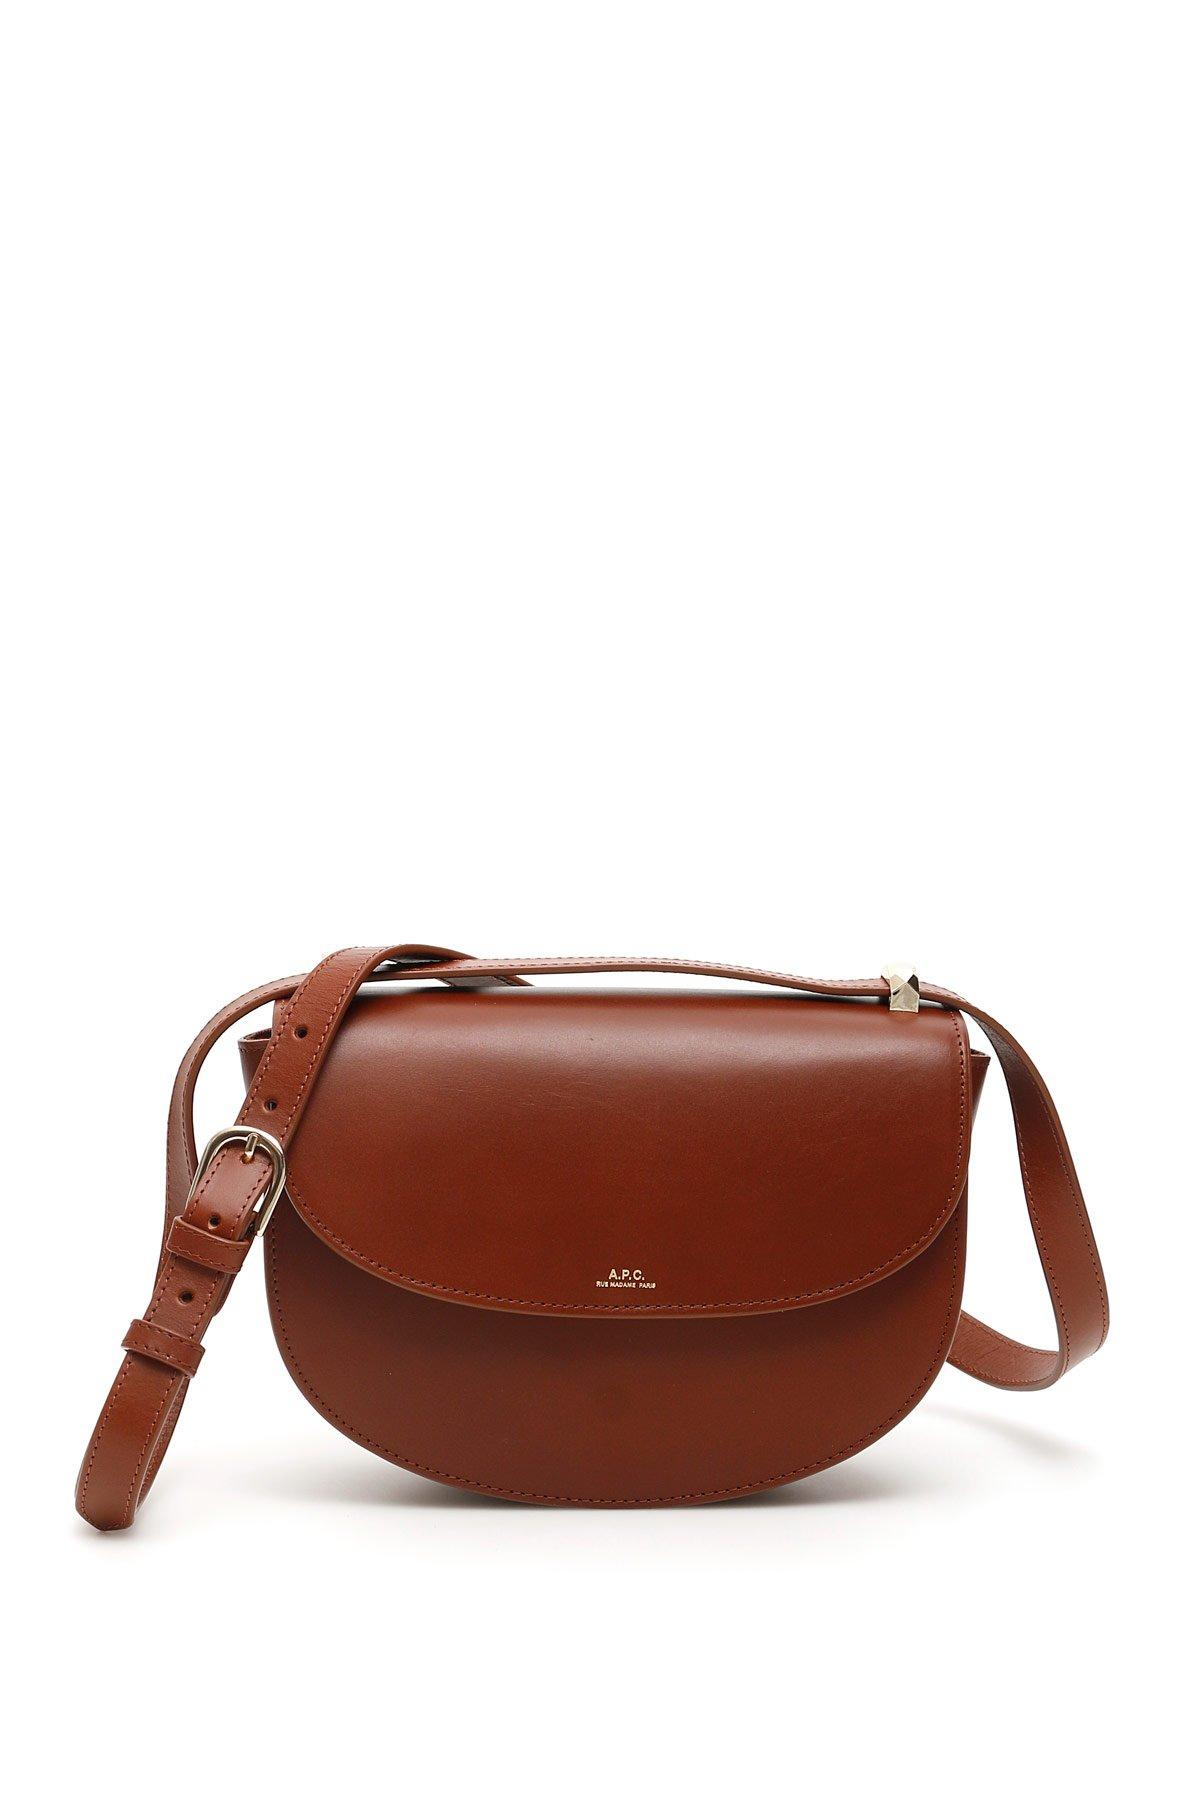 A.P.C. Leather Genève Flap Shoulder Bag in Brown - Lyst